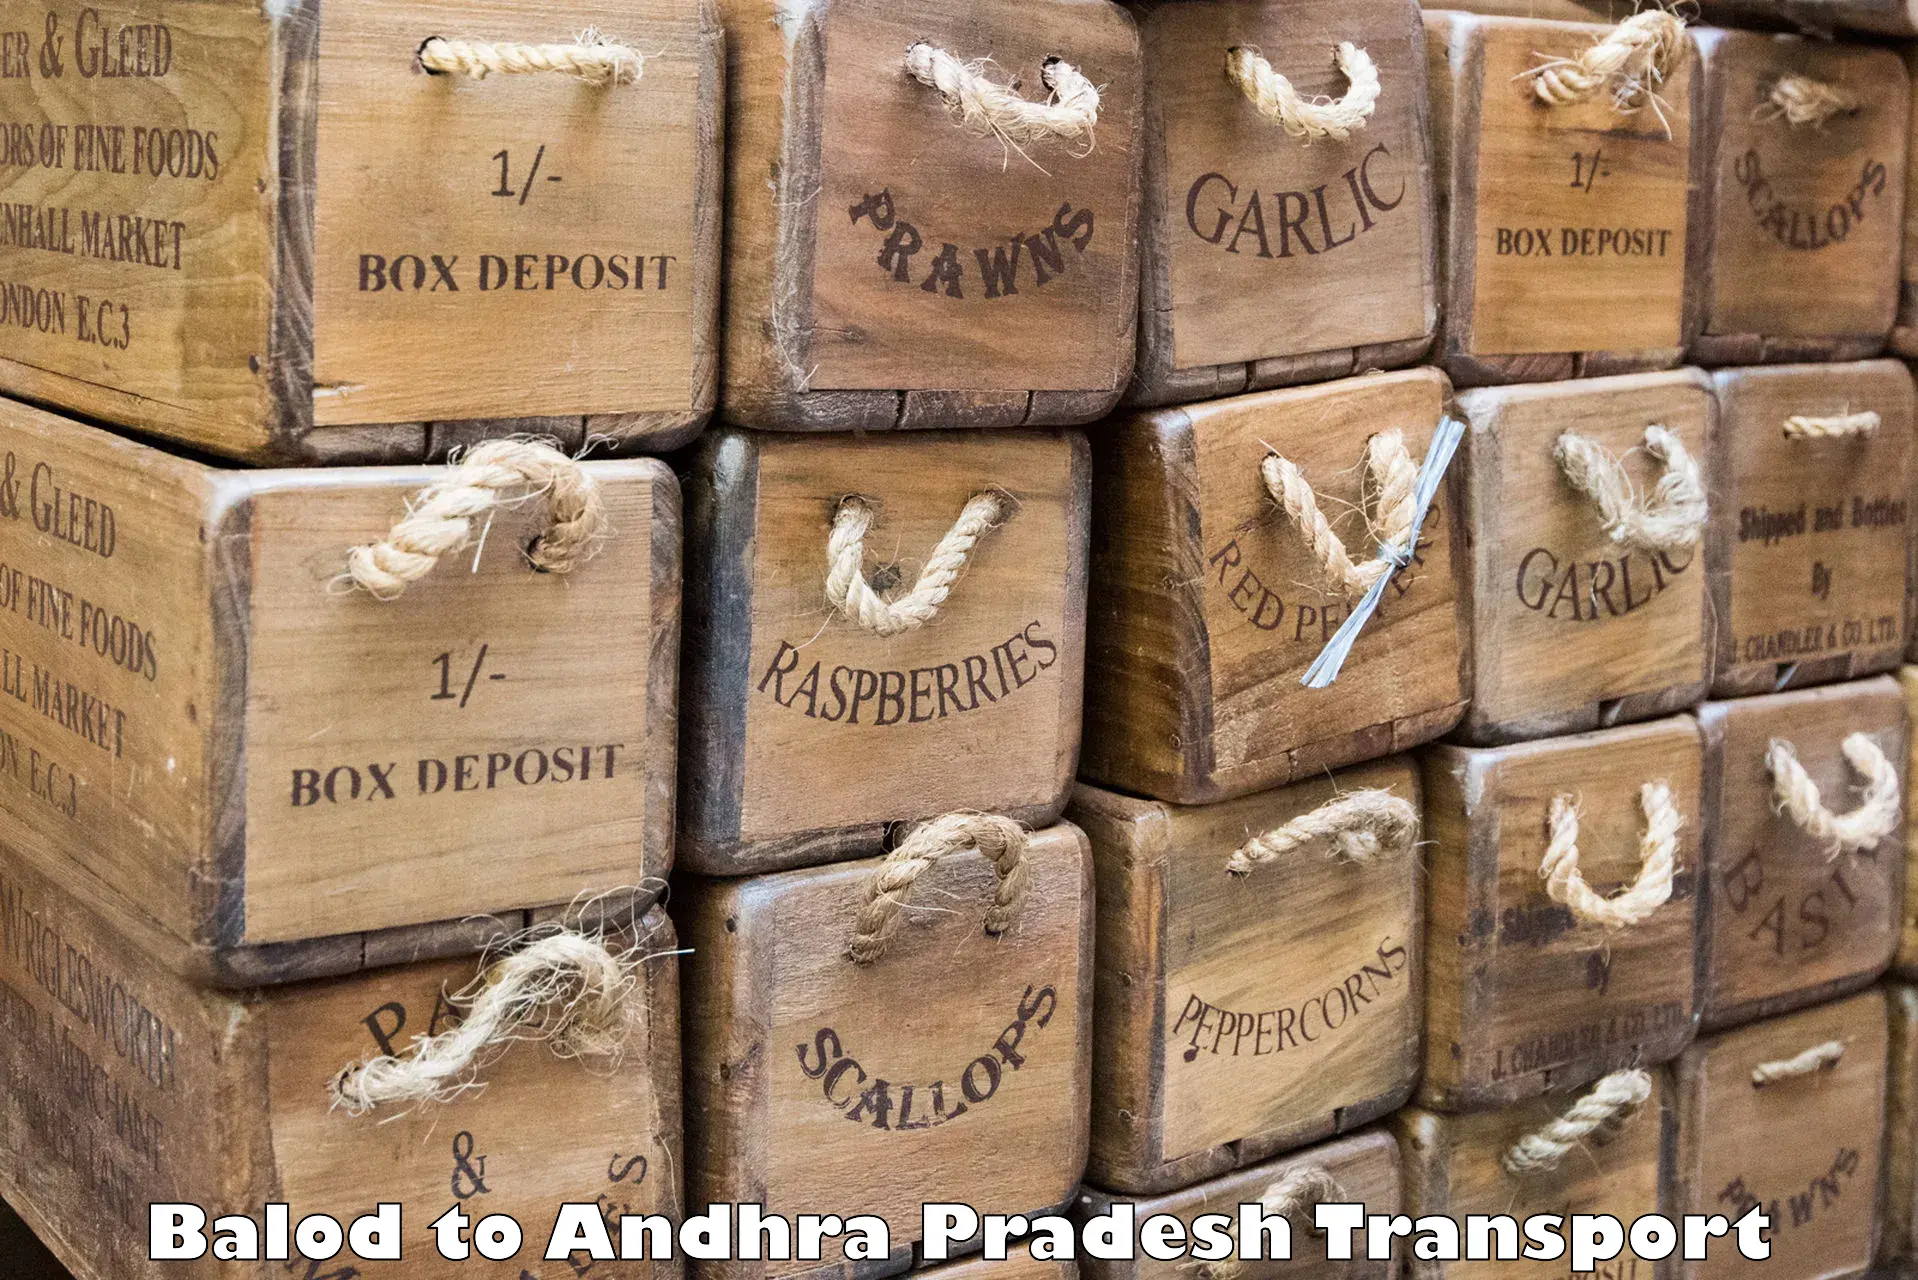 Air freight transport services Balod to Tirupati